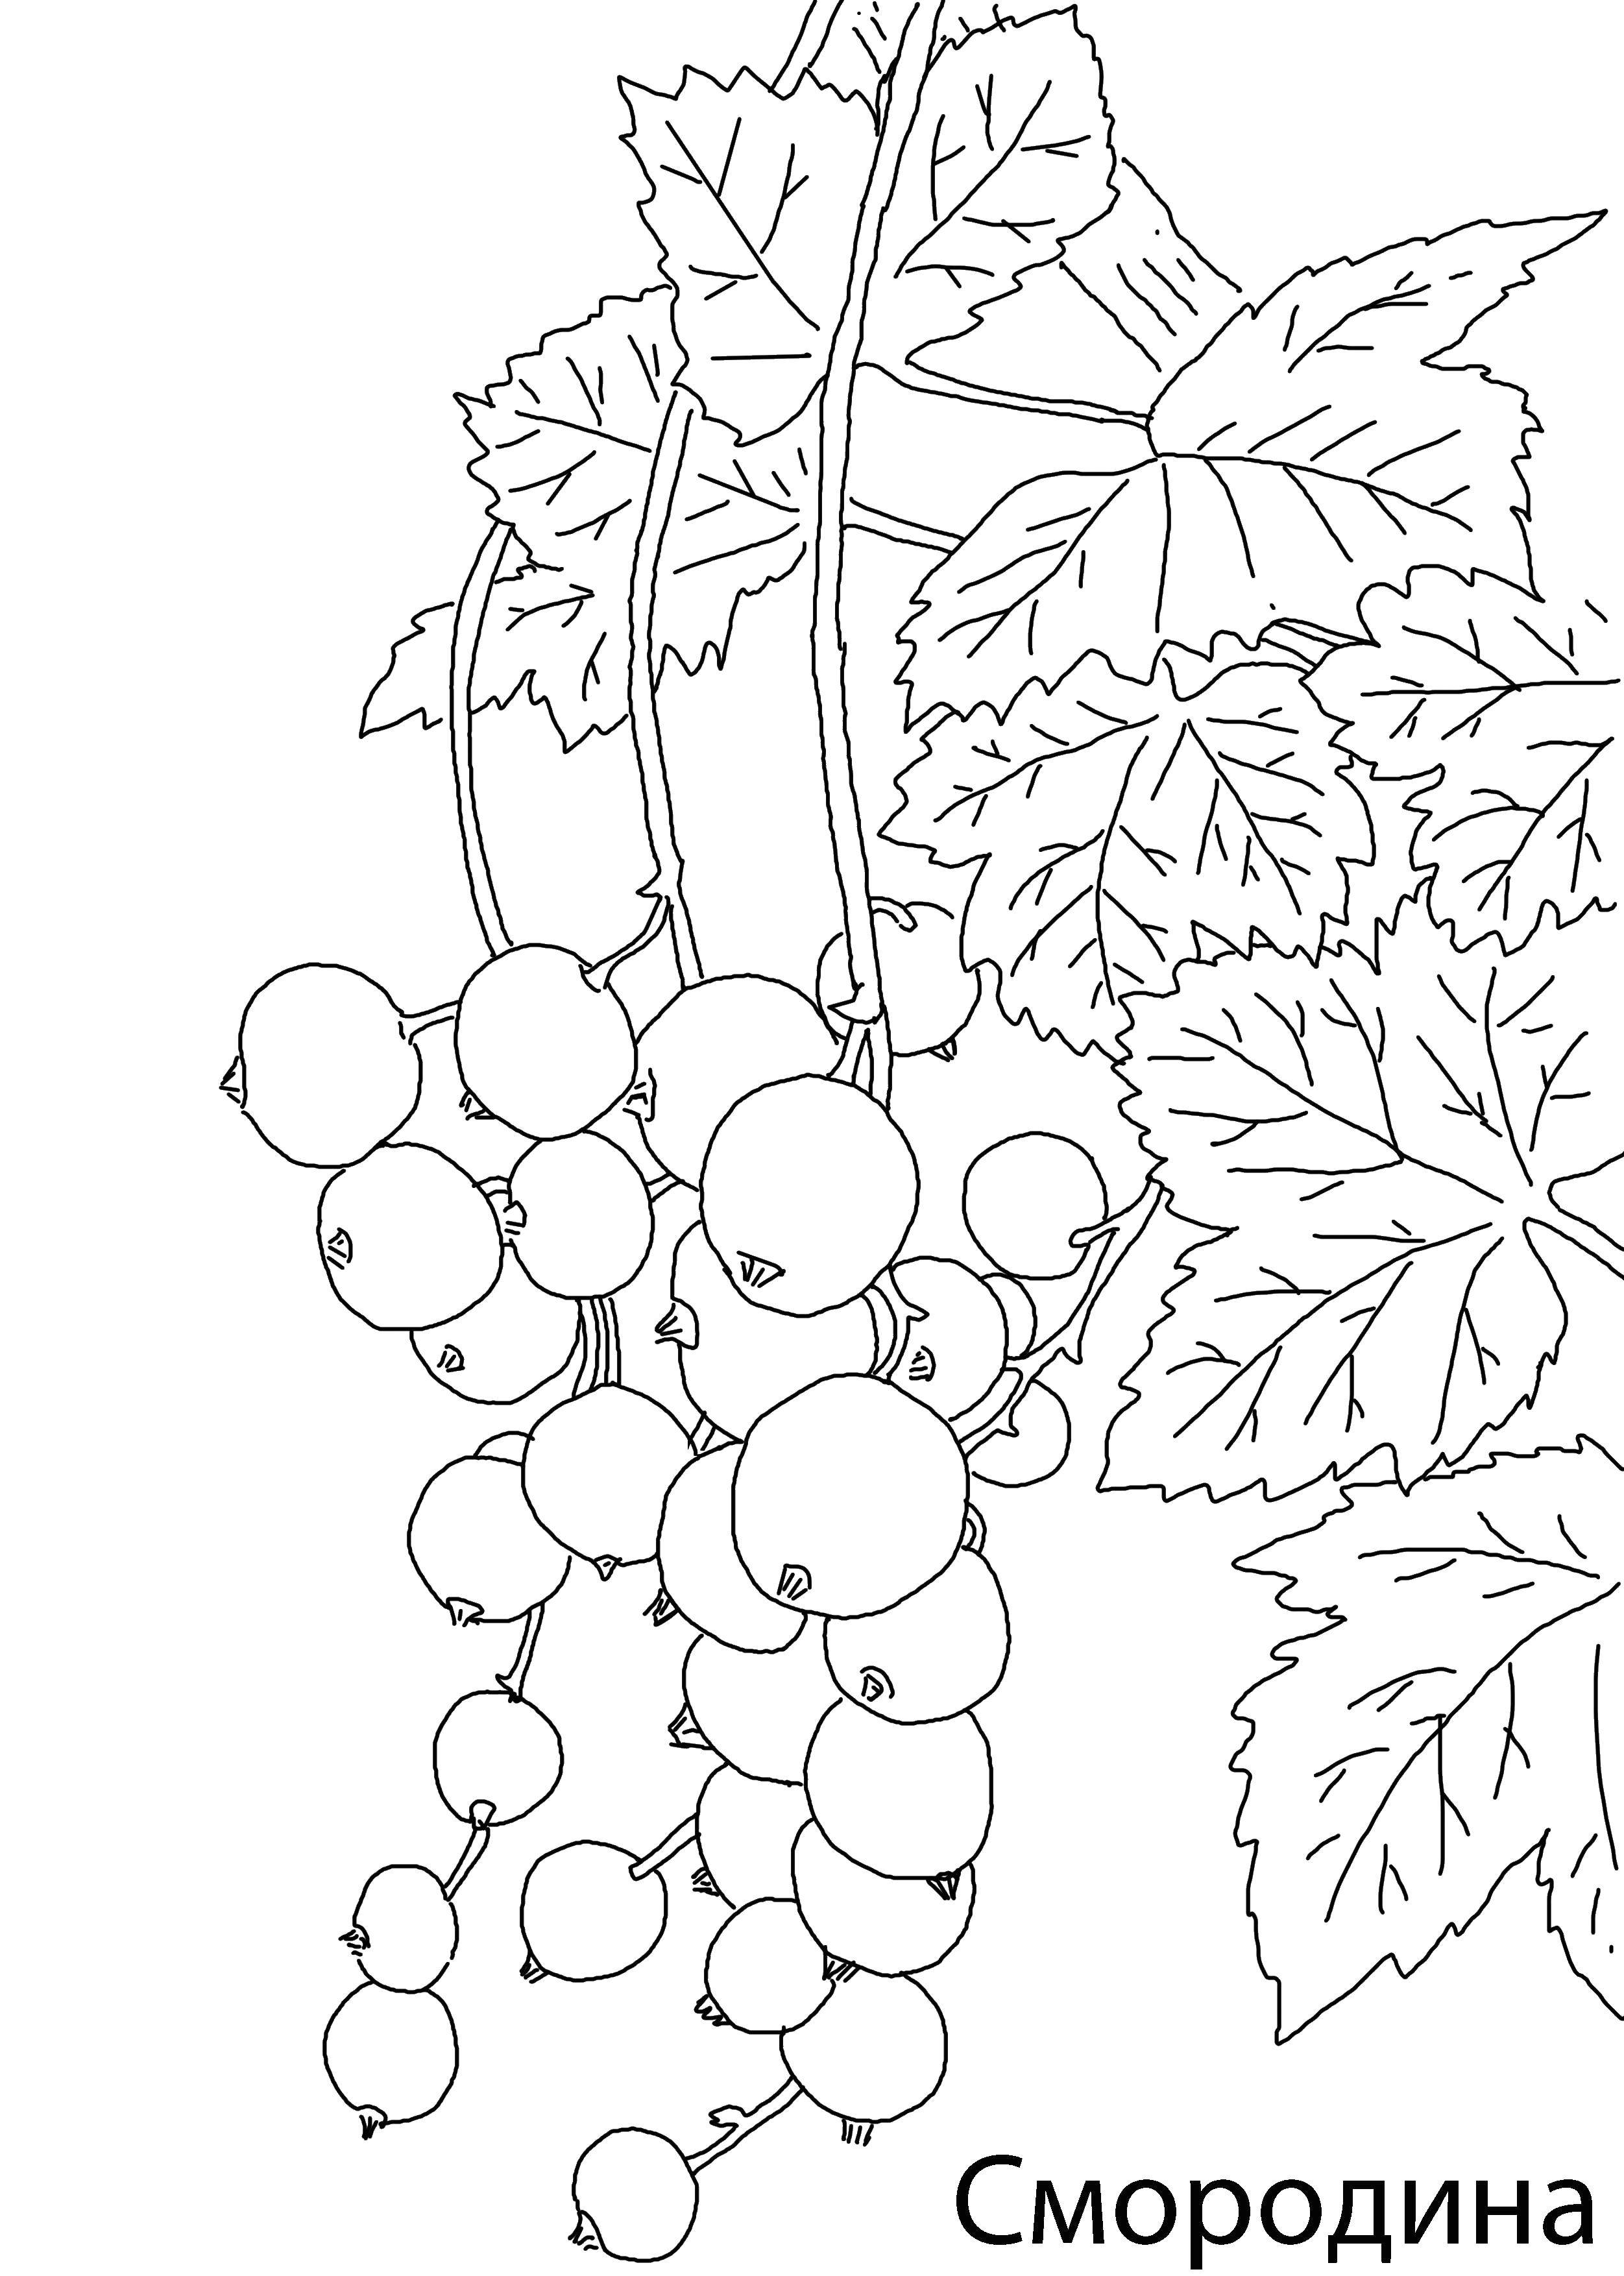 Coloring Smorodinka. Category berries. Tags:  Berries.